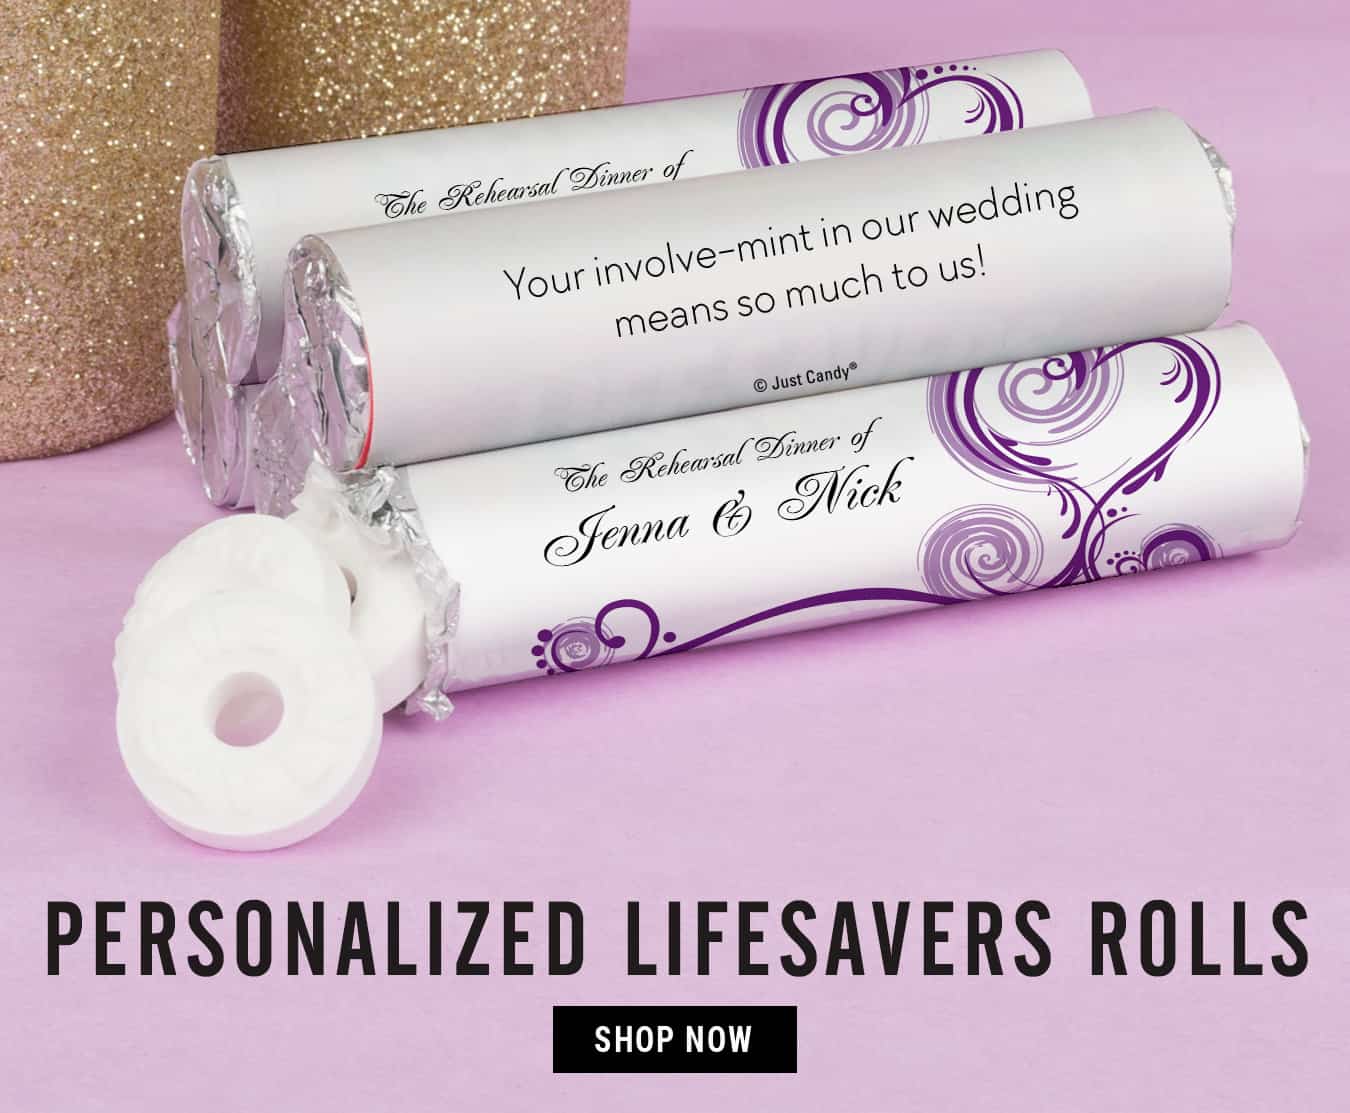 lifesaver rolls